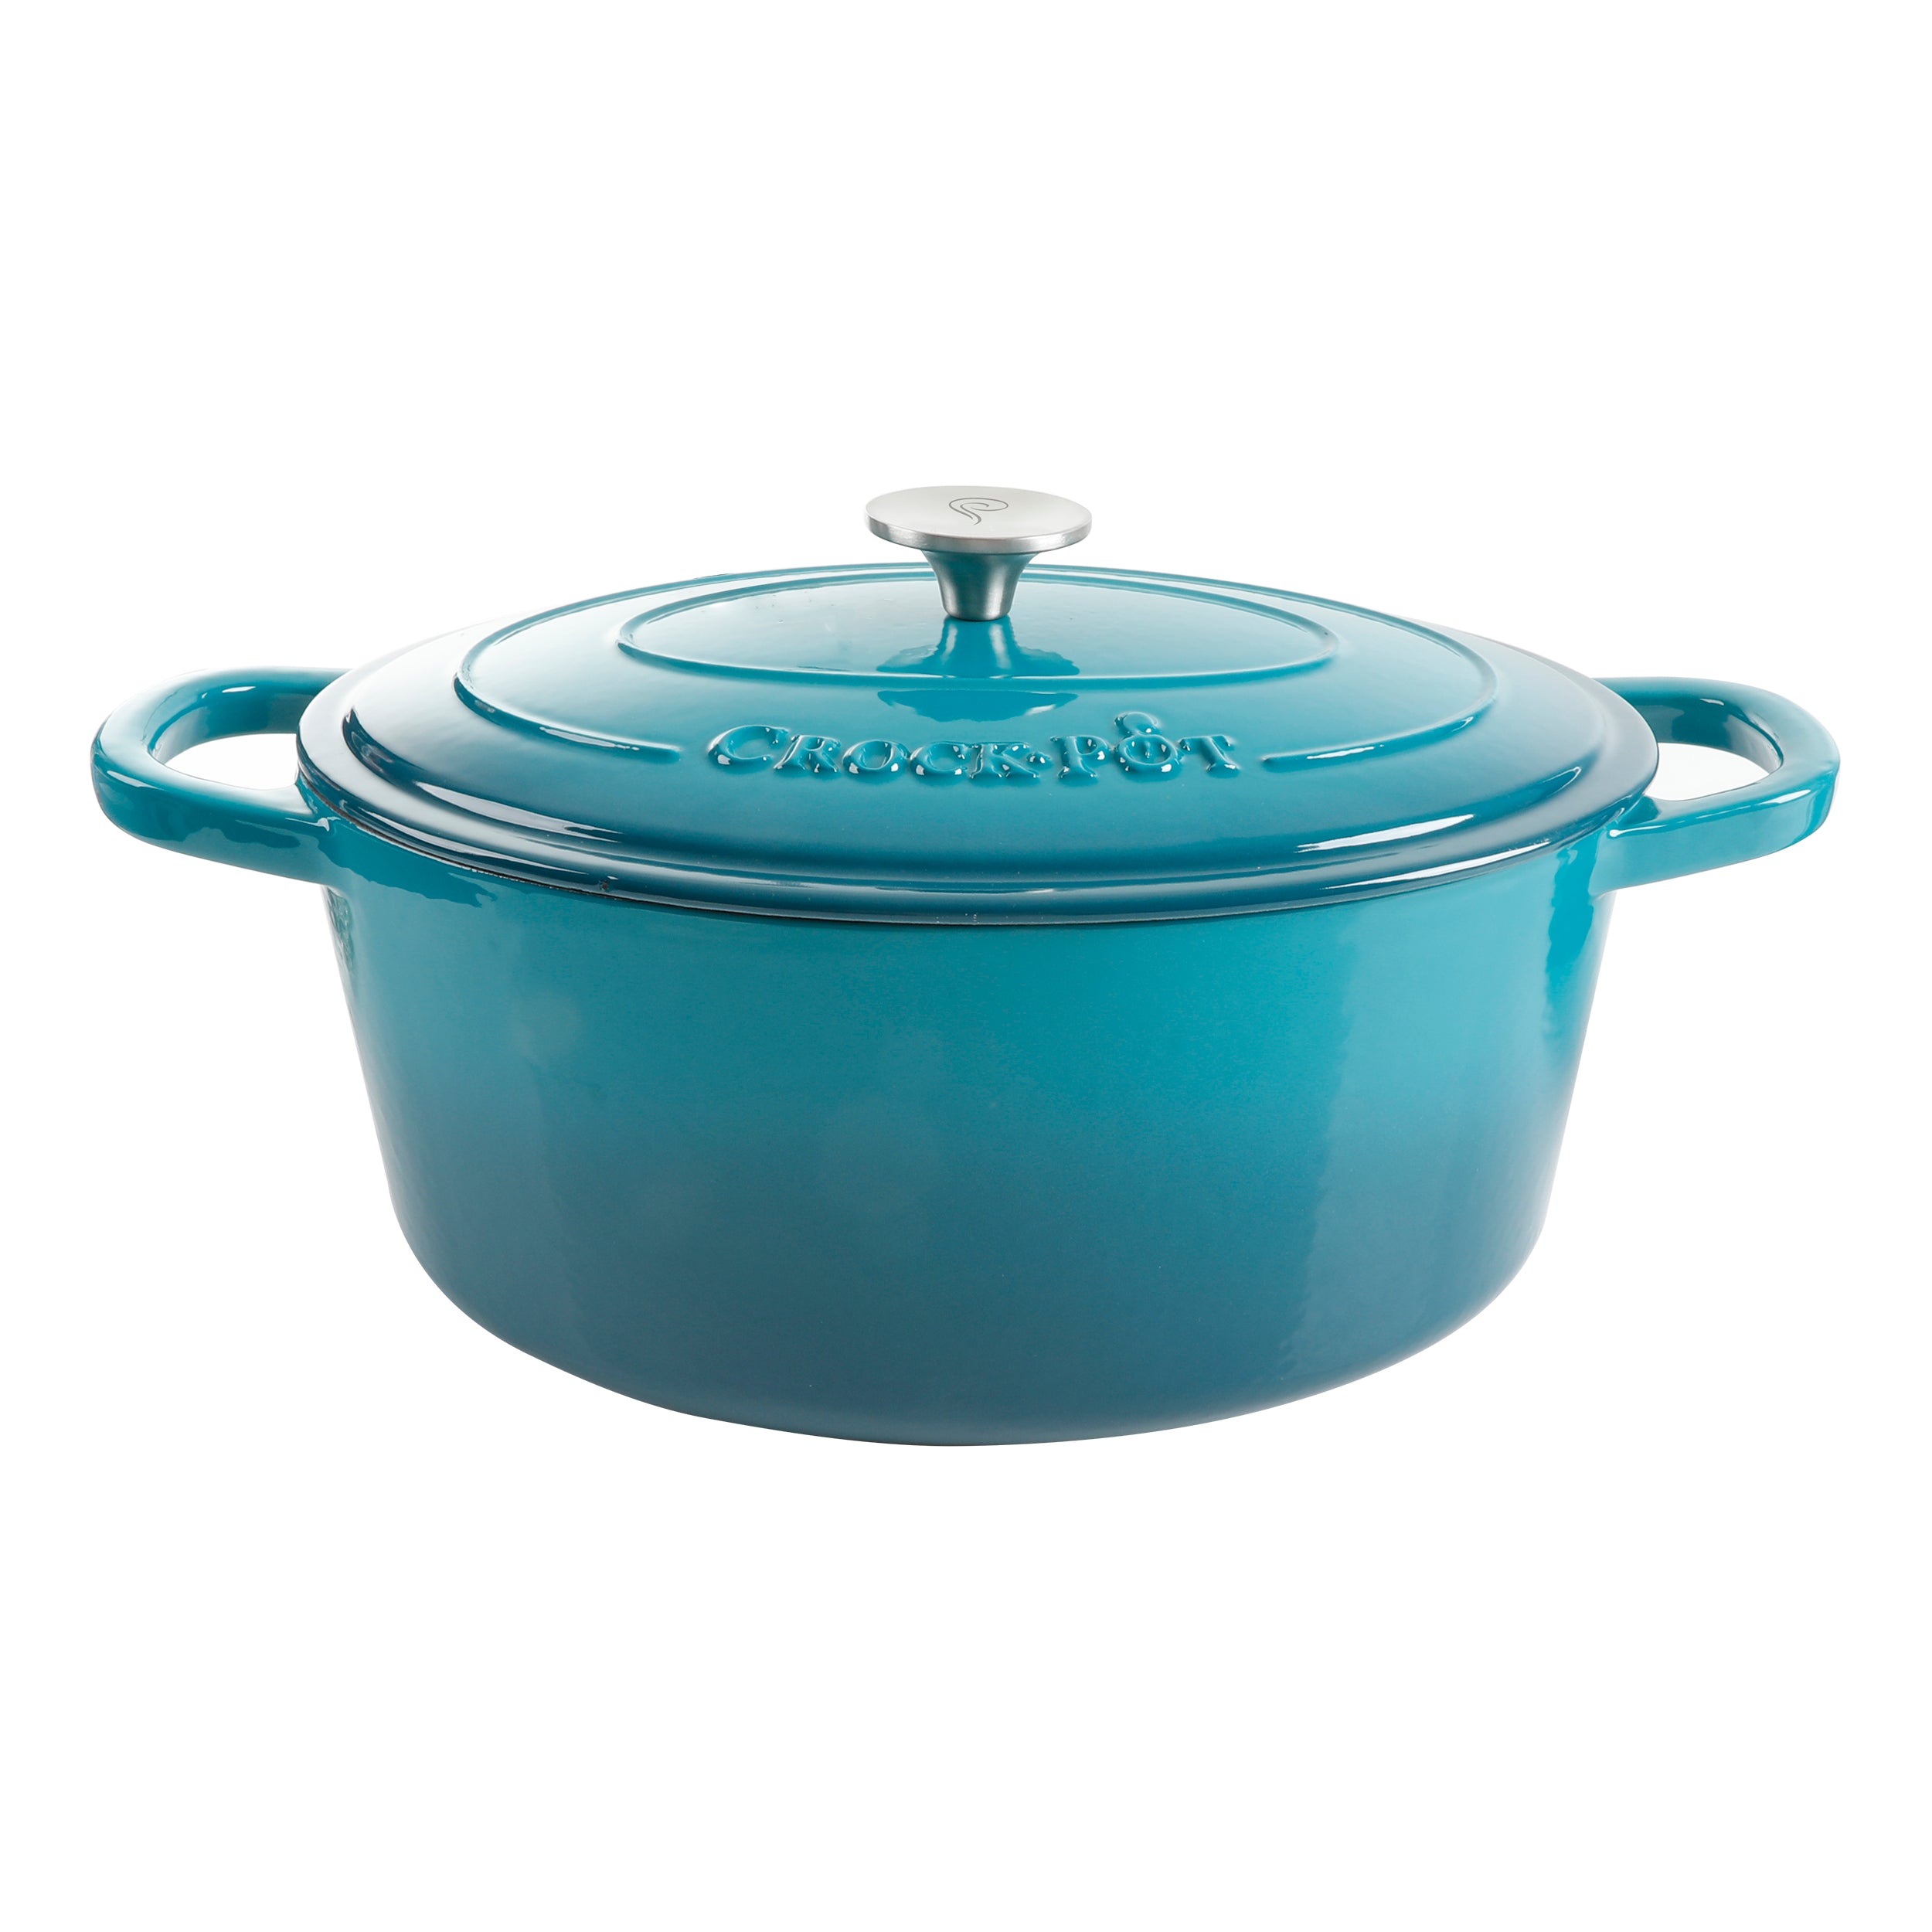  Crock Pot Artisan 13 Inch Enameled Cast Iron Lasagna Pan, Teal  Ombre: Home & Kitchen